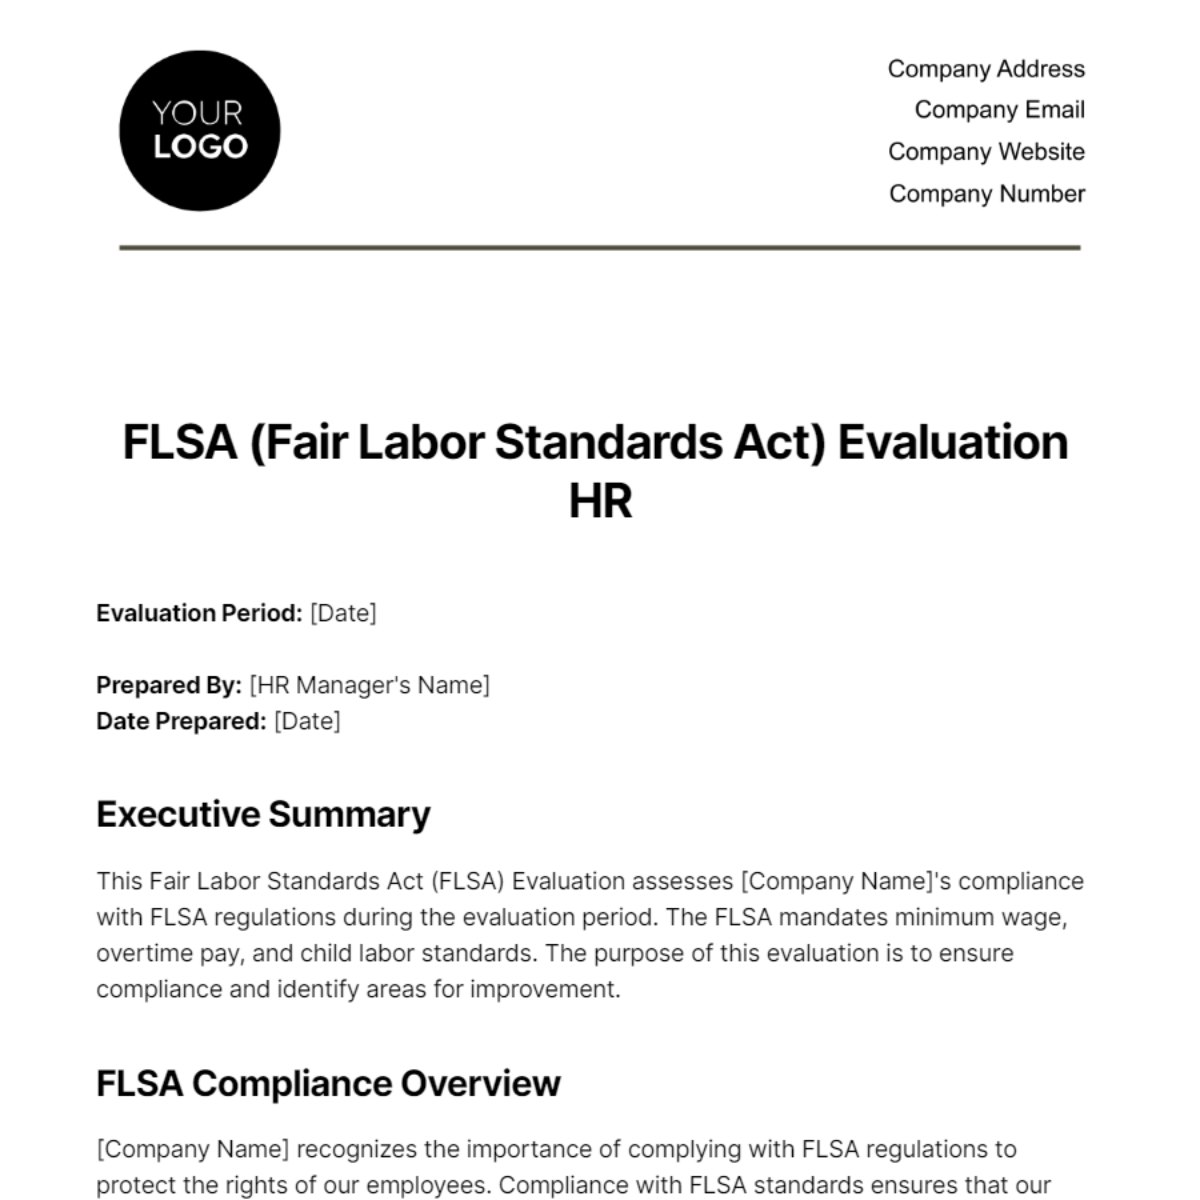 Free FLSA (Fair Labor Standards Act) Evaluation HR Template